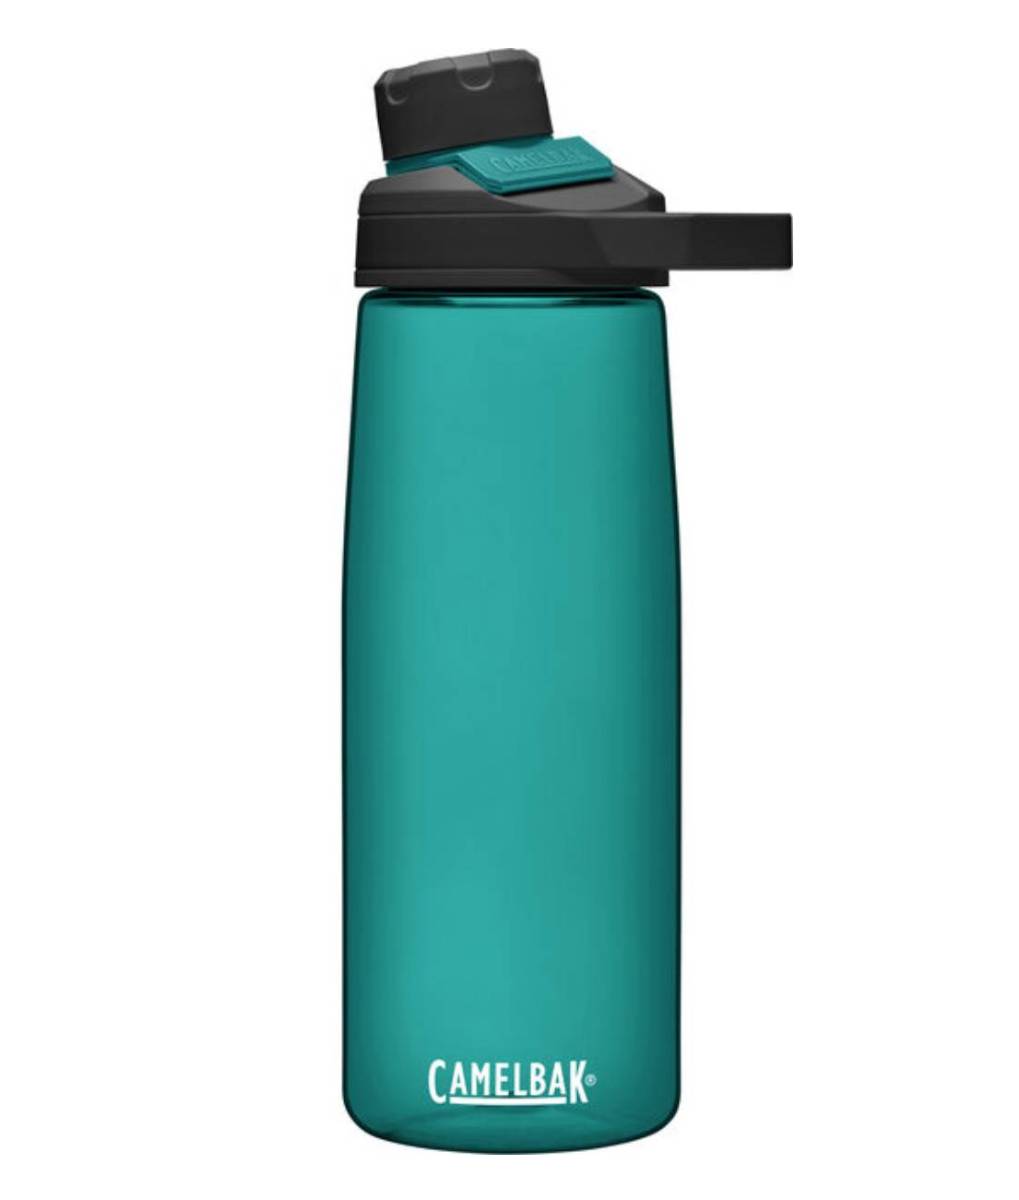 CamelBak 25oz Eddy+ Vacuum Insulated Stainless Steel Water Bottle - Black